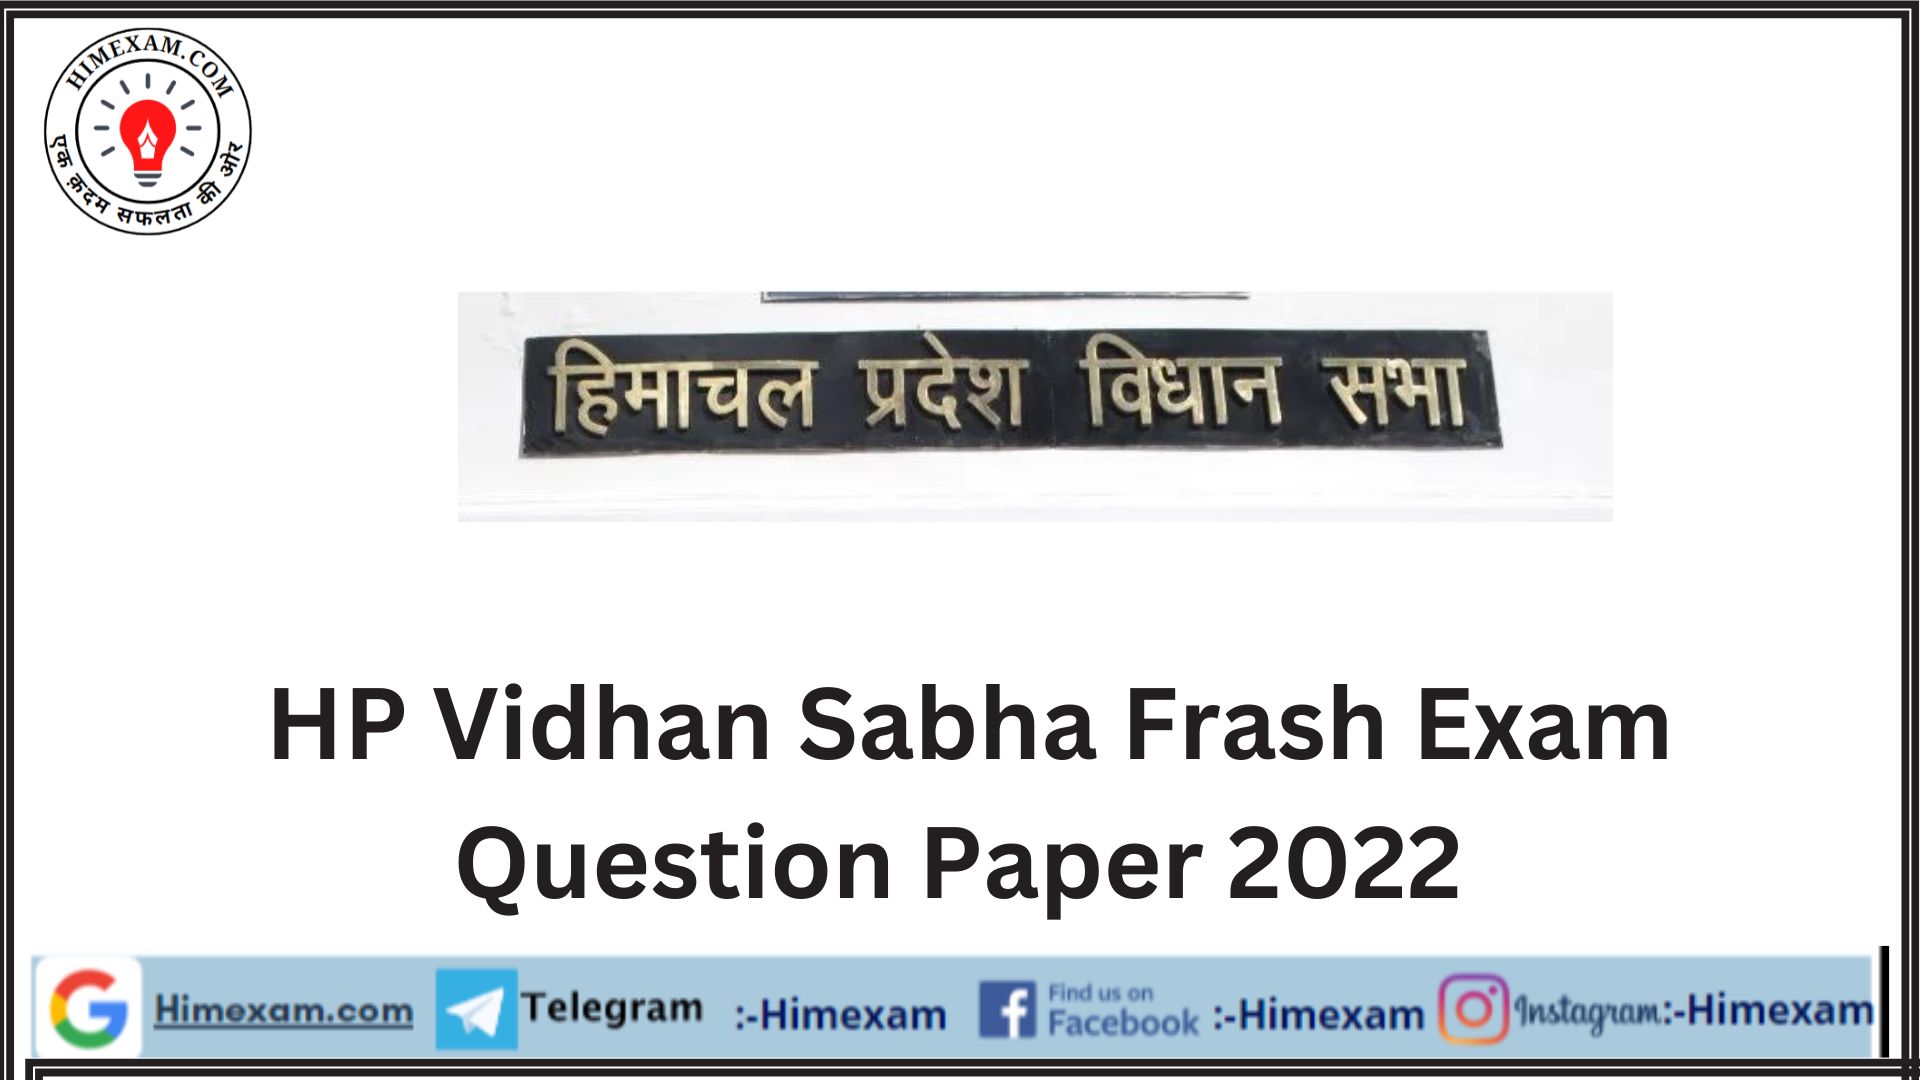 HP Vidhan Sabha Frash Exam Question Paper 2022